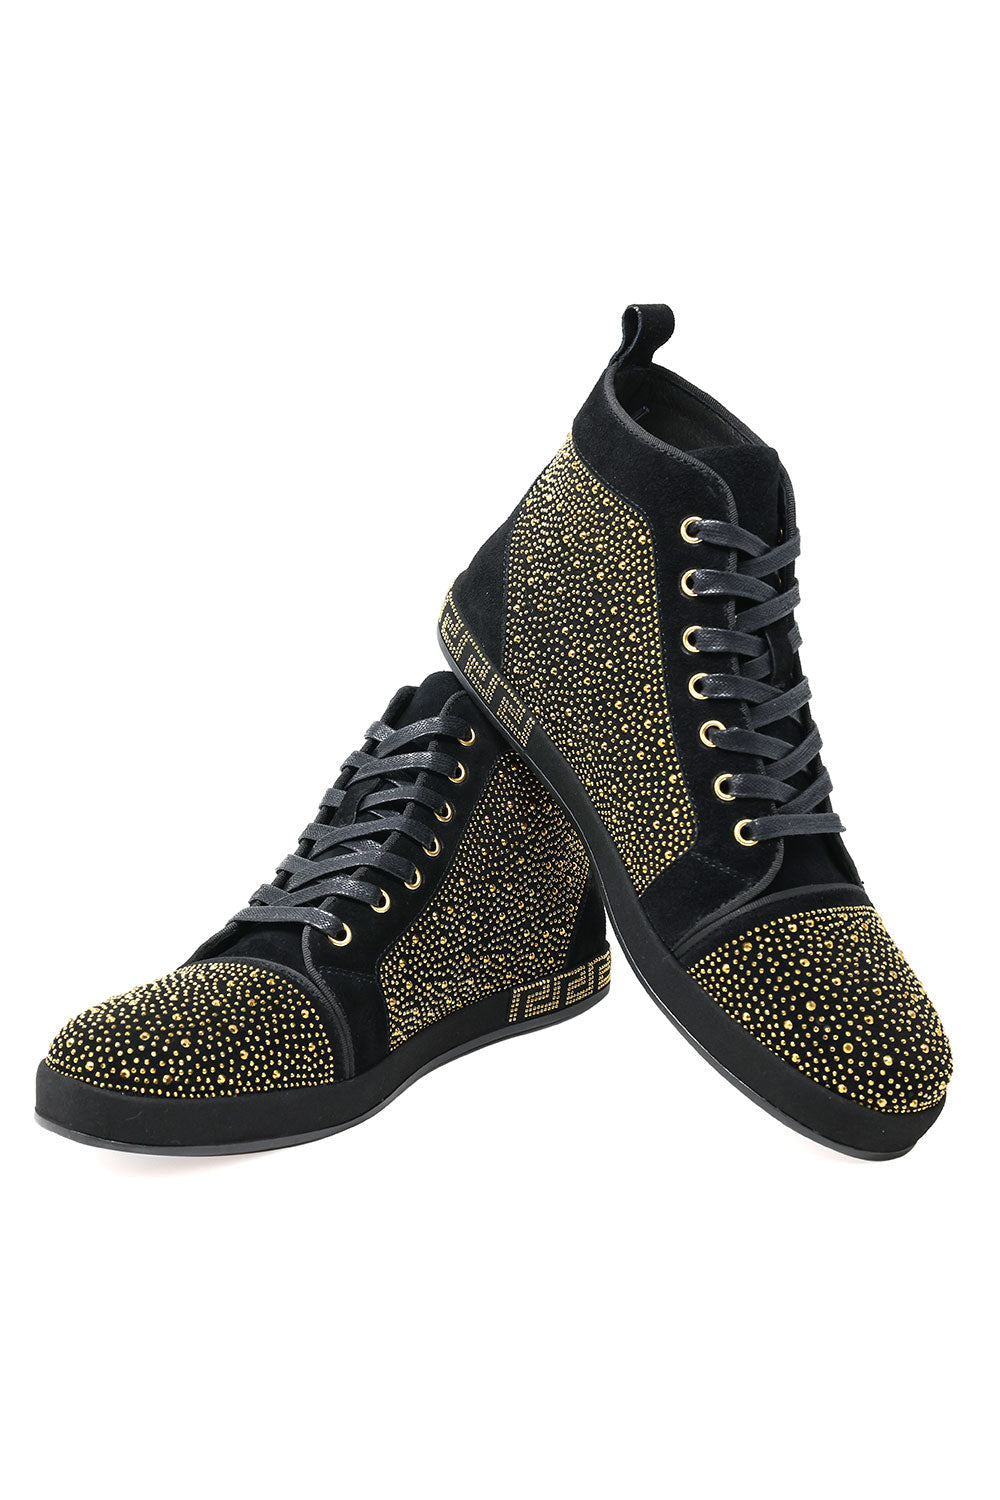 Barabas men's luxury Greek pattern rhinestone high-top sneakers SH724 gold